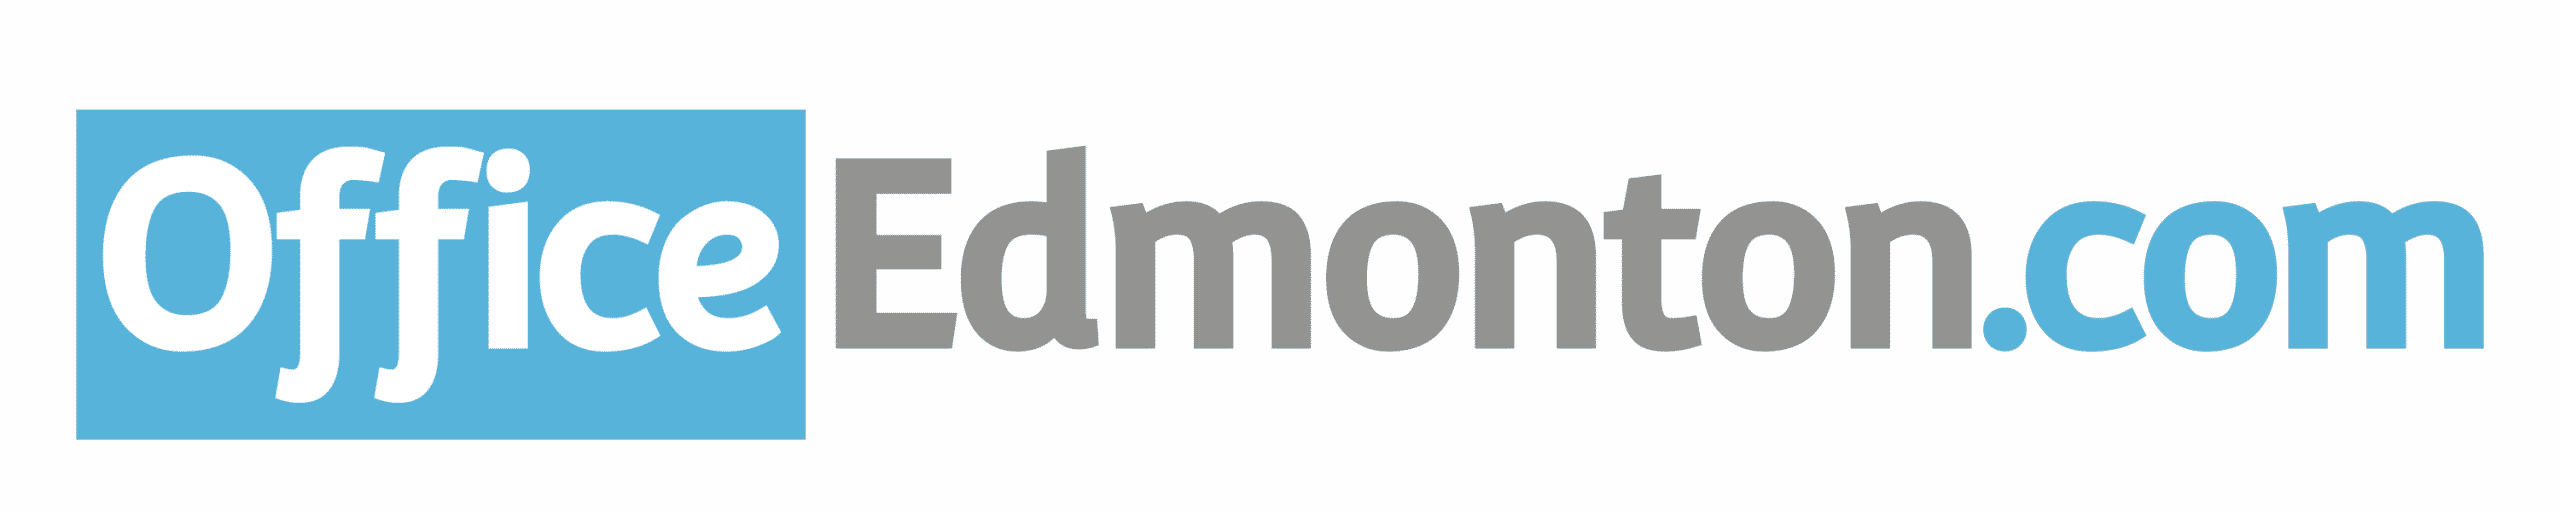 OfficeEdmonton_Logo_Jul2018-01